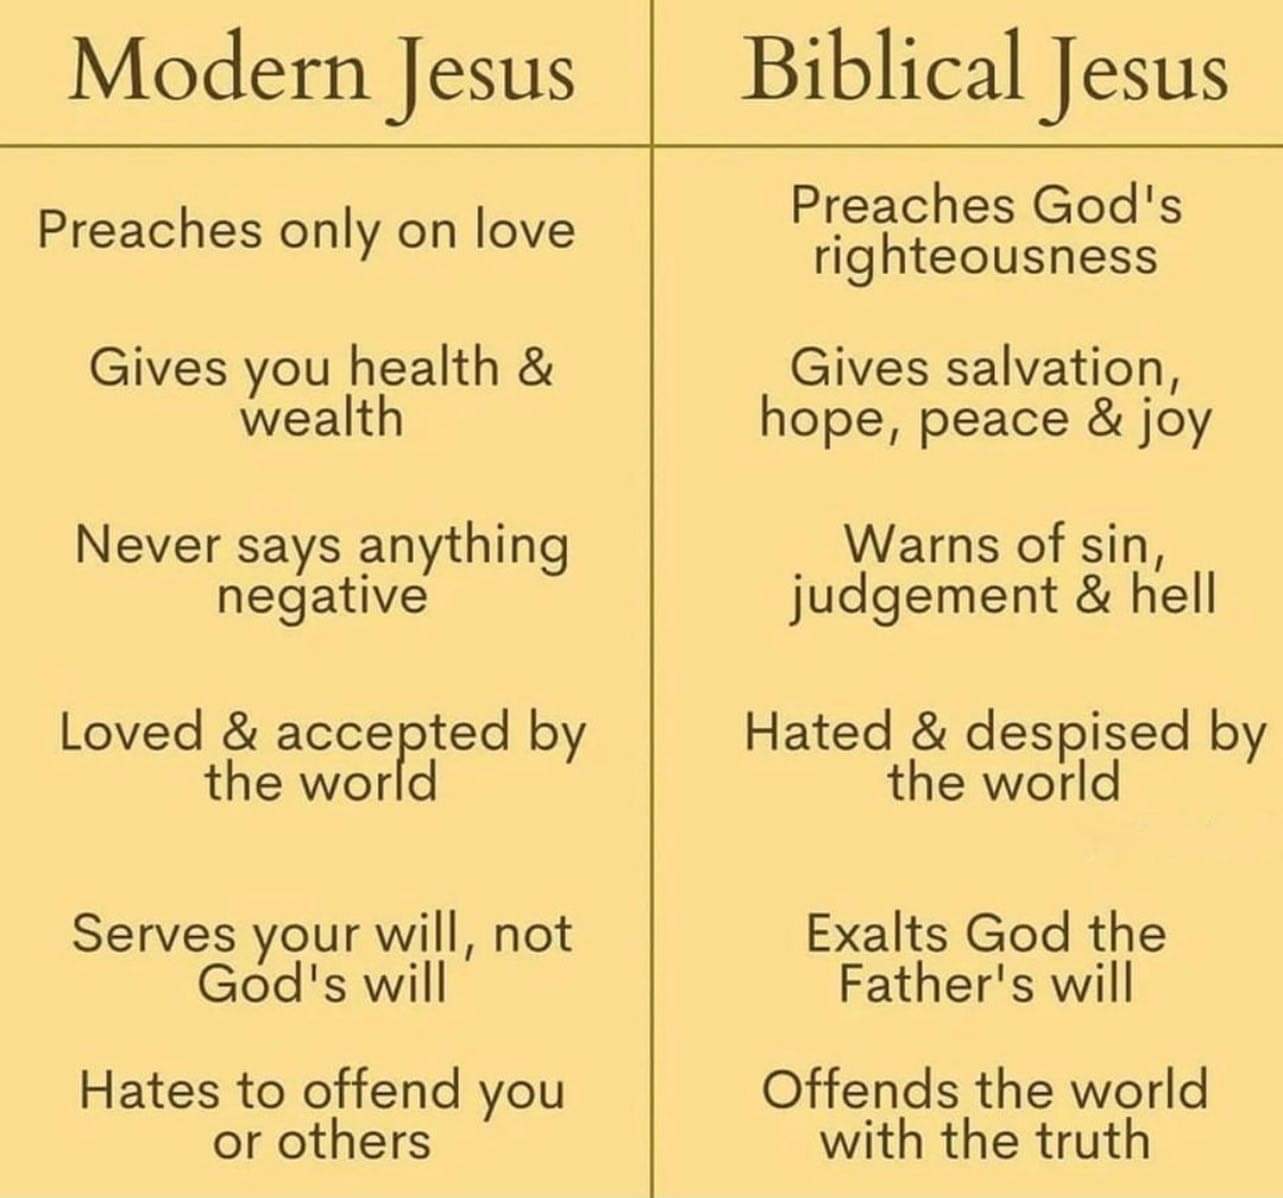 Biblical Versus Modern Jesus